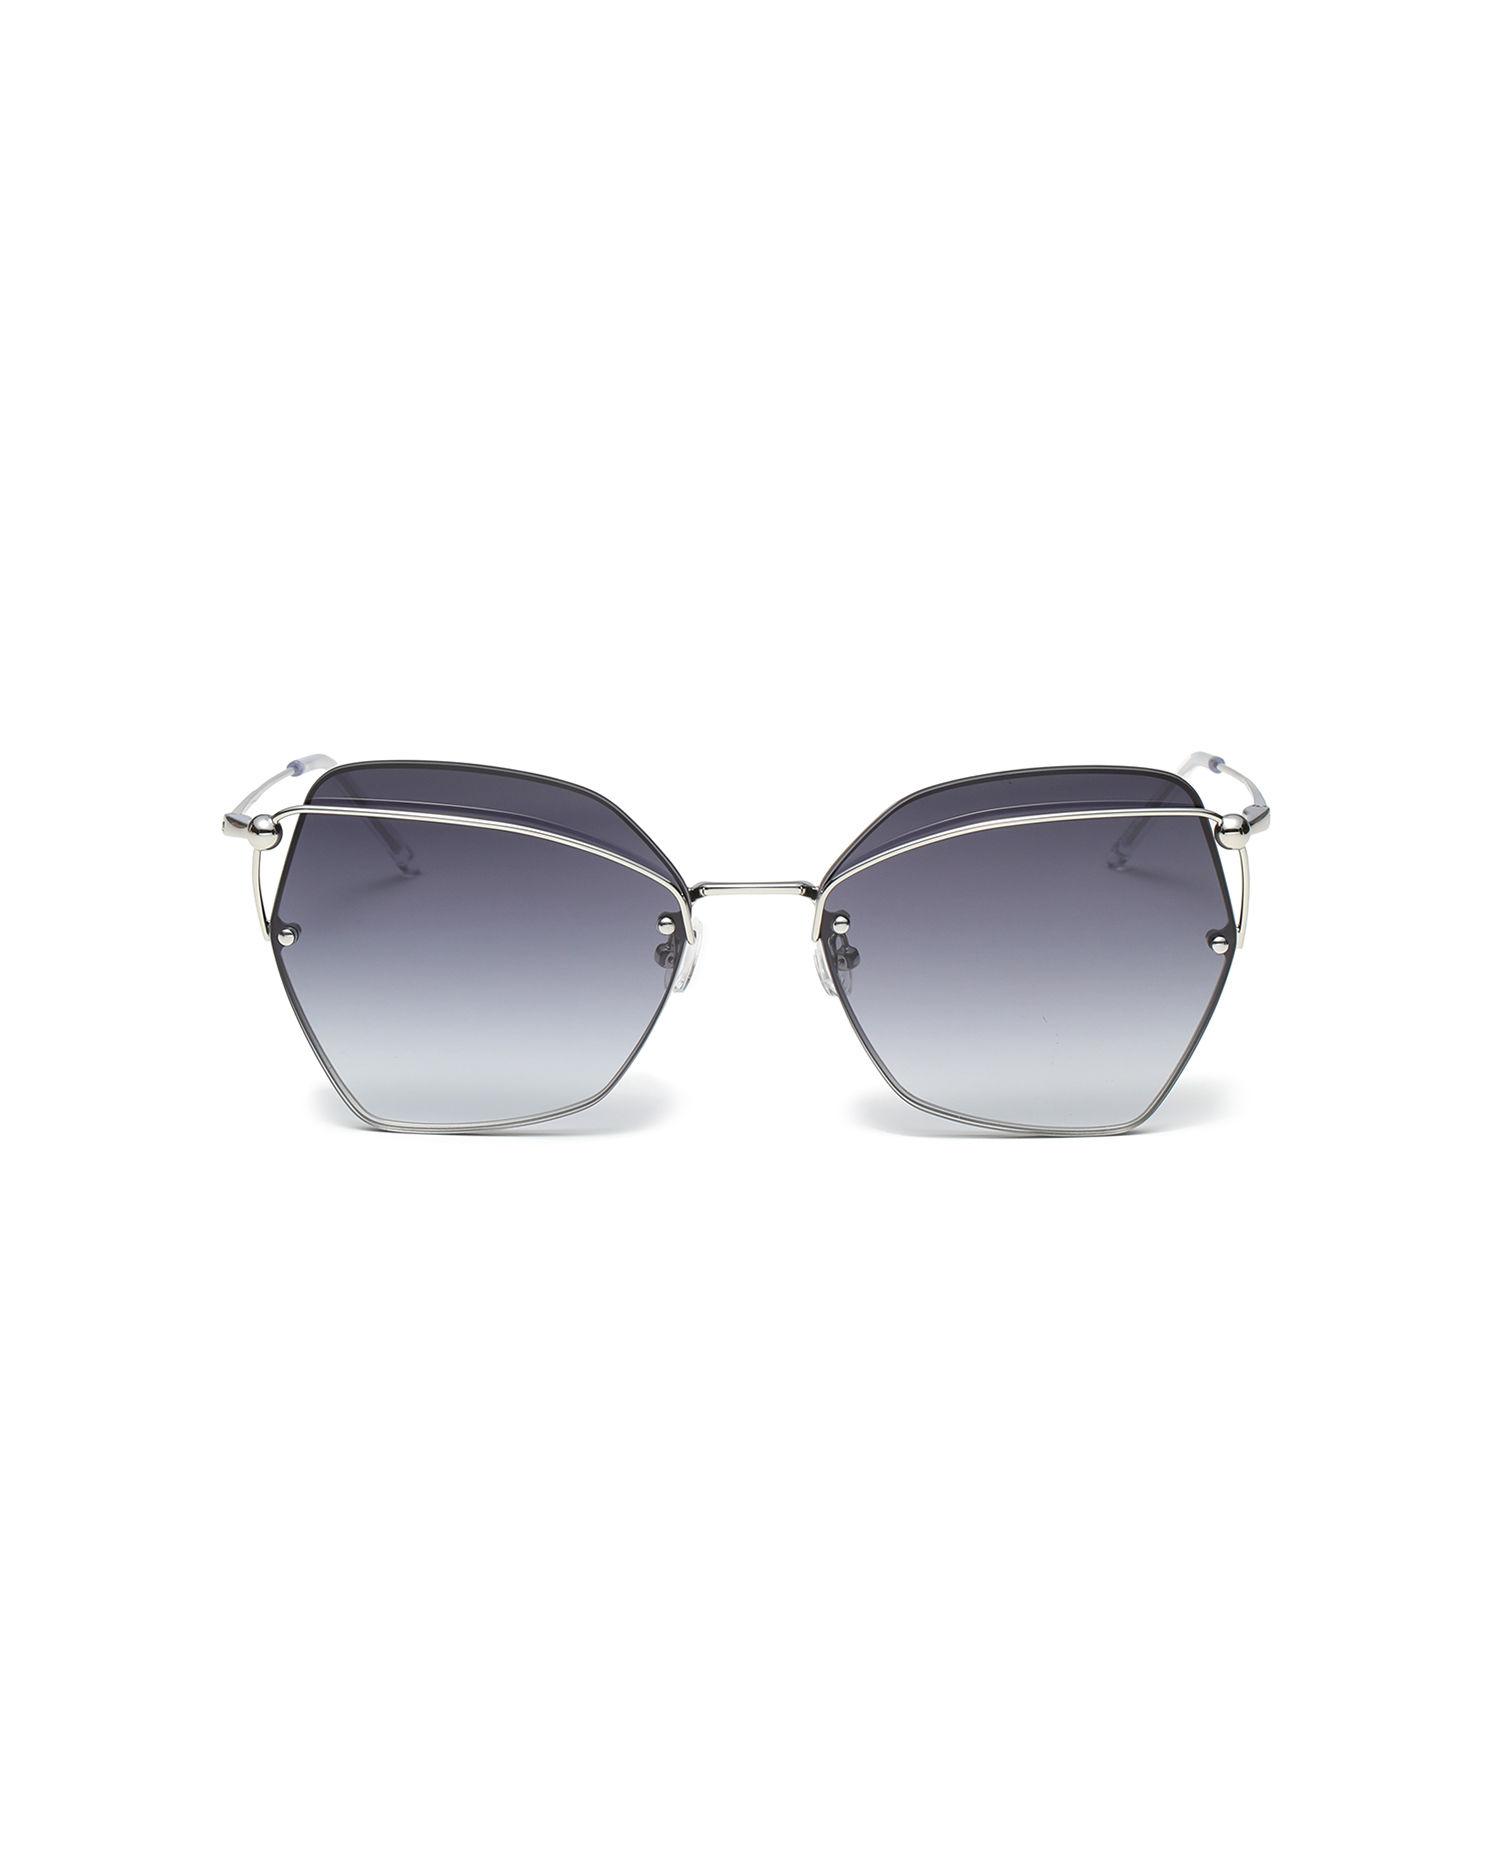 Irregular frame sunglasses by BIAS